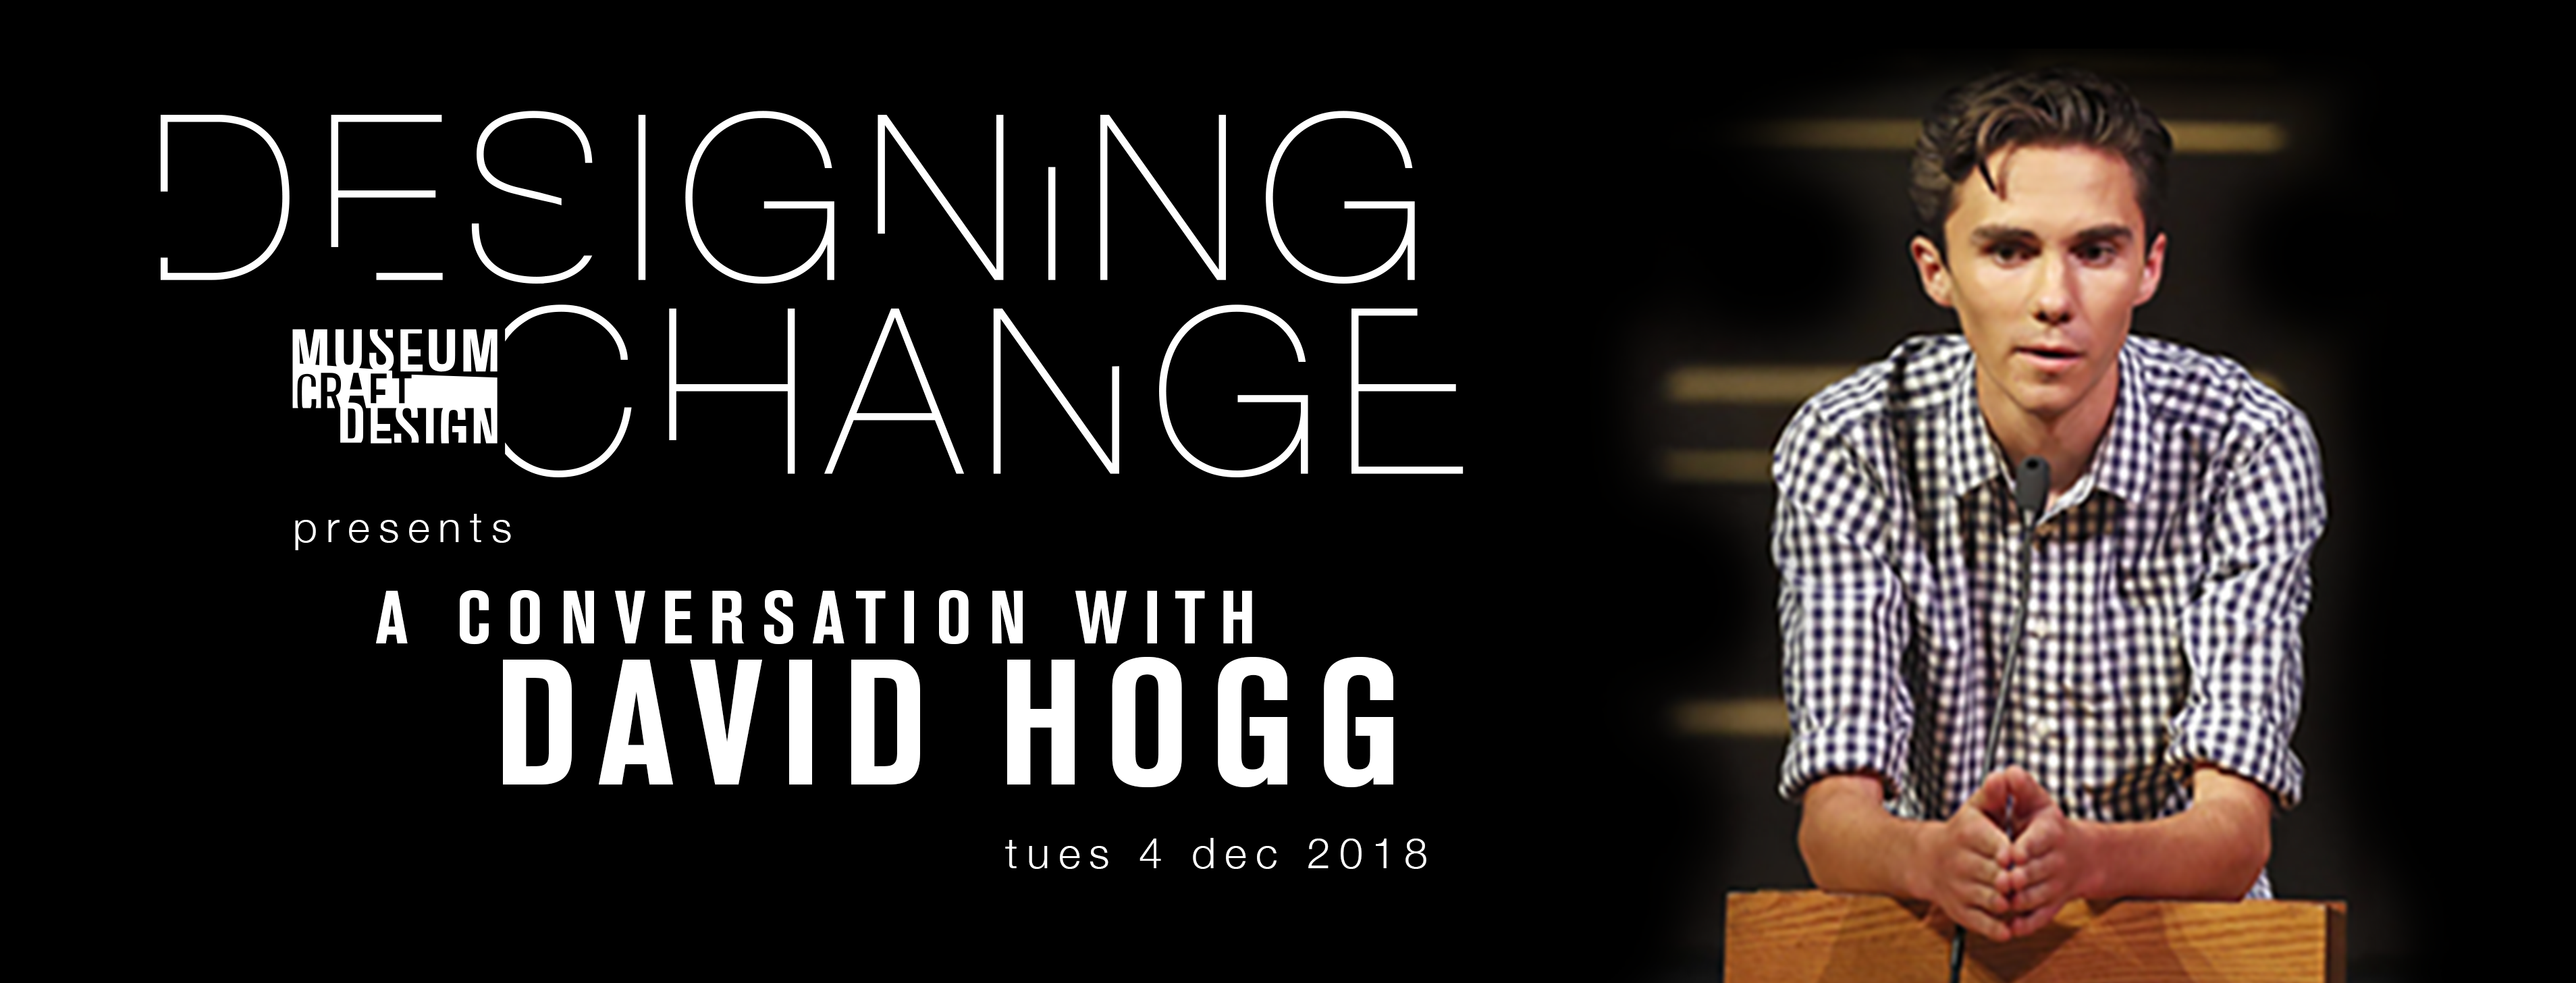 Designing Change: A conversation with David Hogg